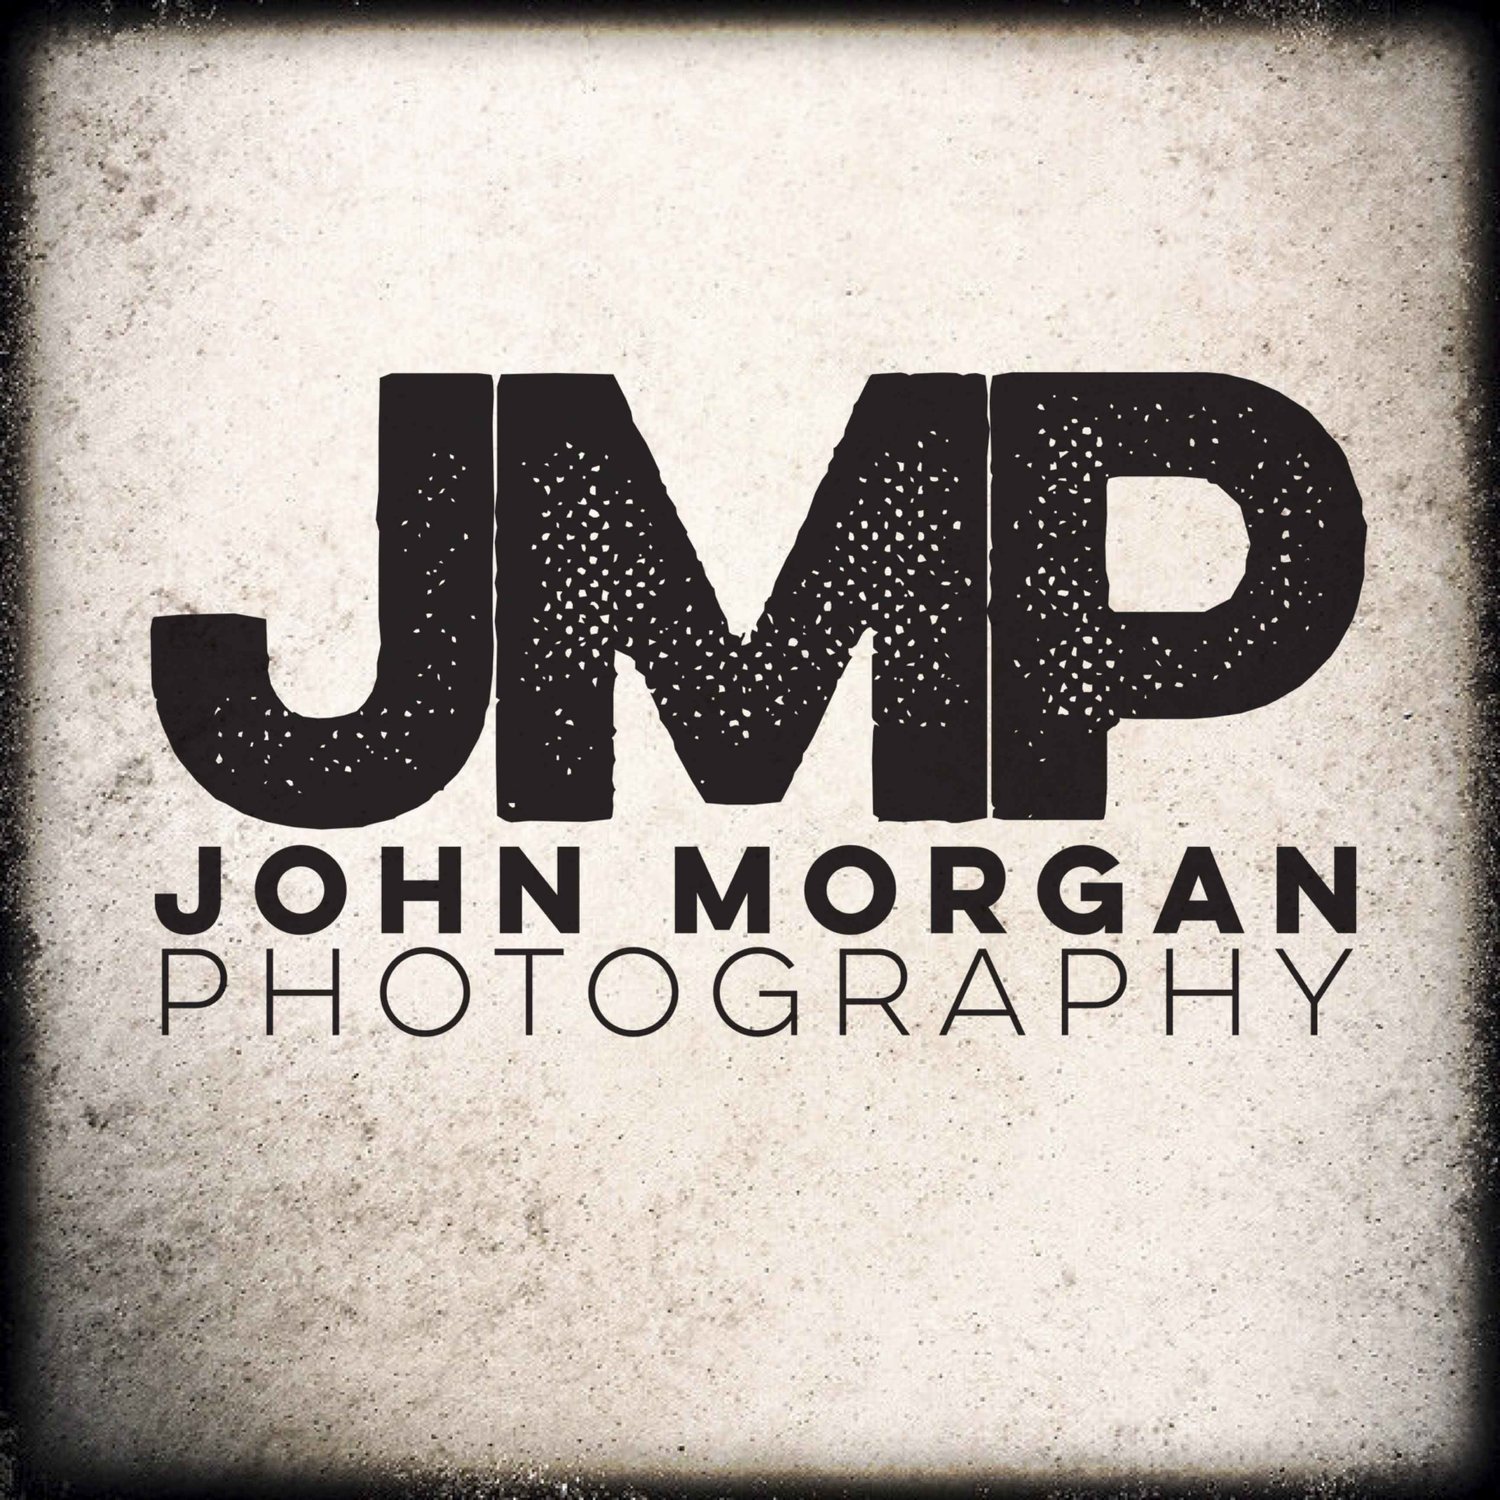 John Morgan Photography